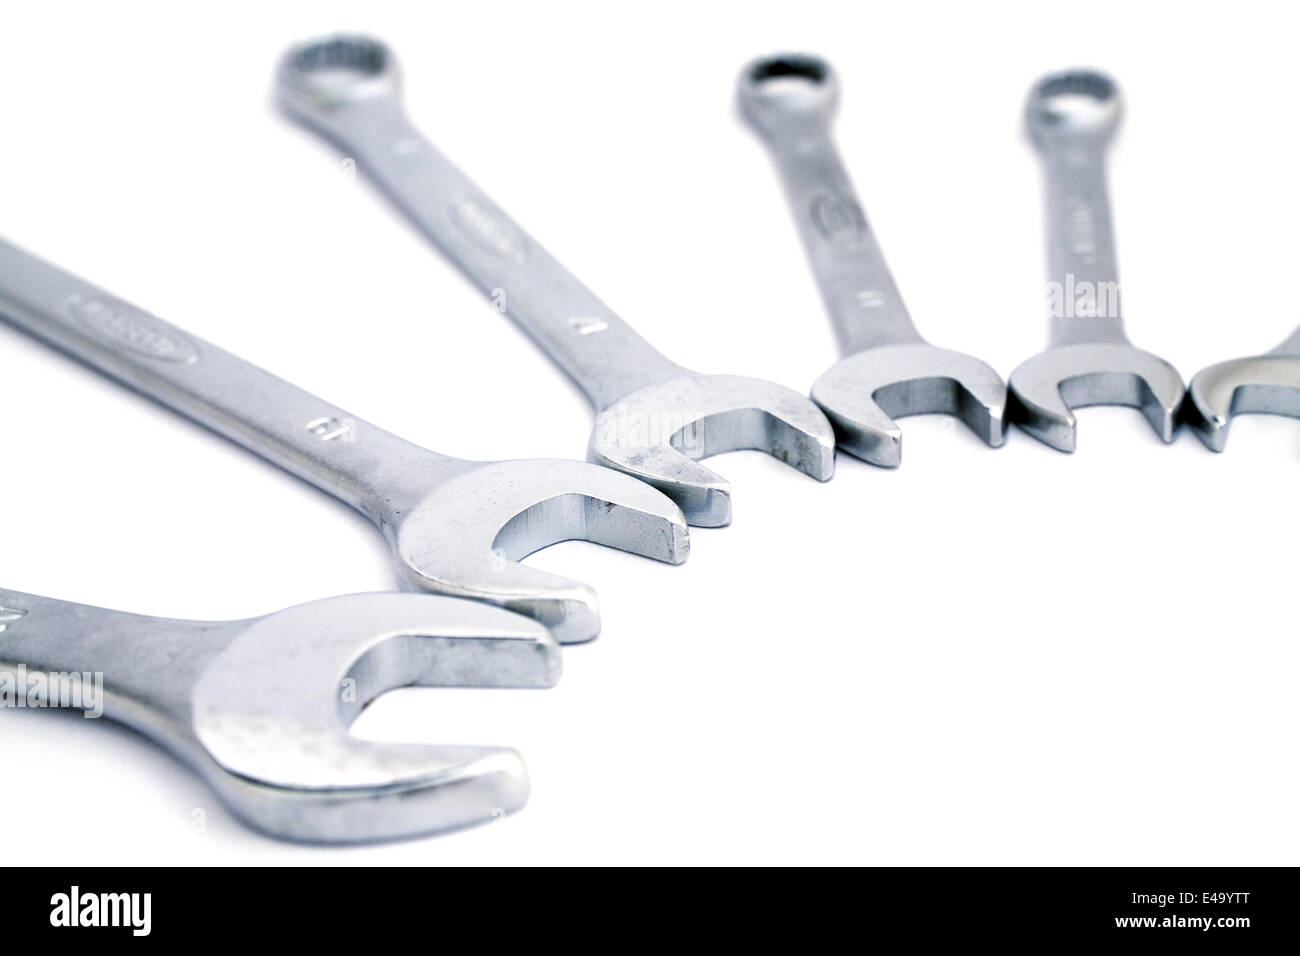 Set of metal tools Stock Photo